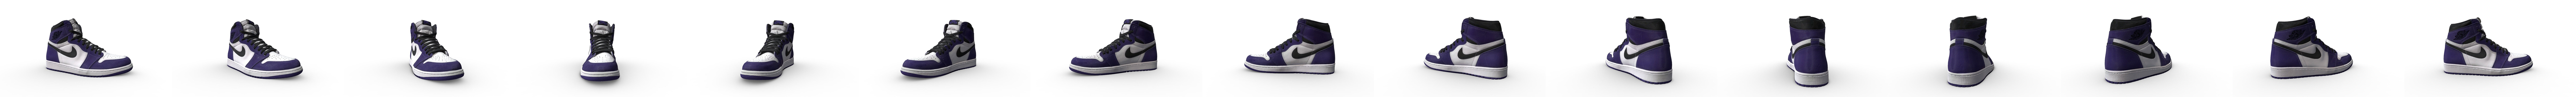 Nike Air Jordan 1 Retro High Court Purple White Buy Royalty Free 3d Model By Chrisprice Chrisprice 6aad092